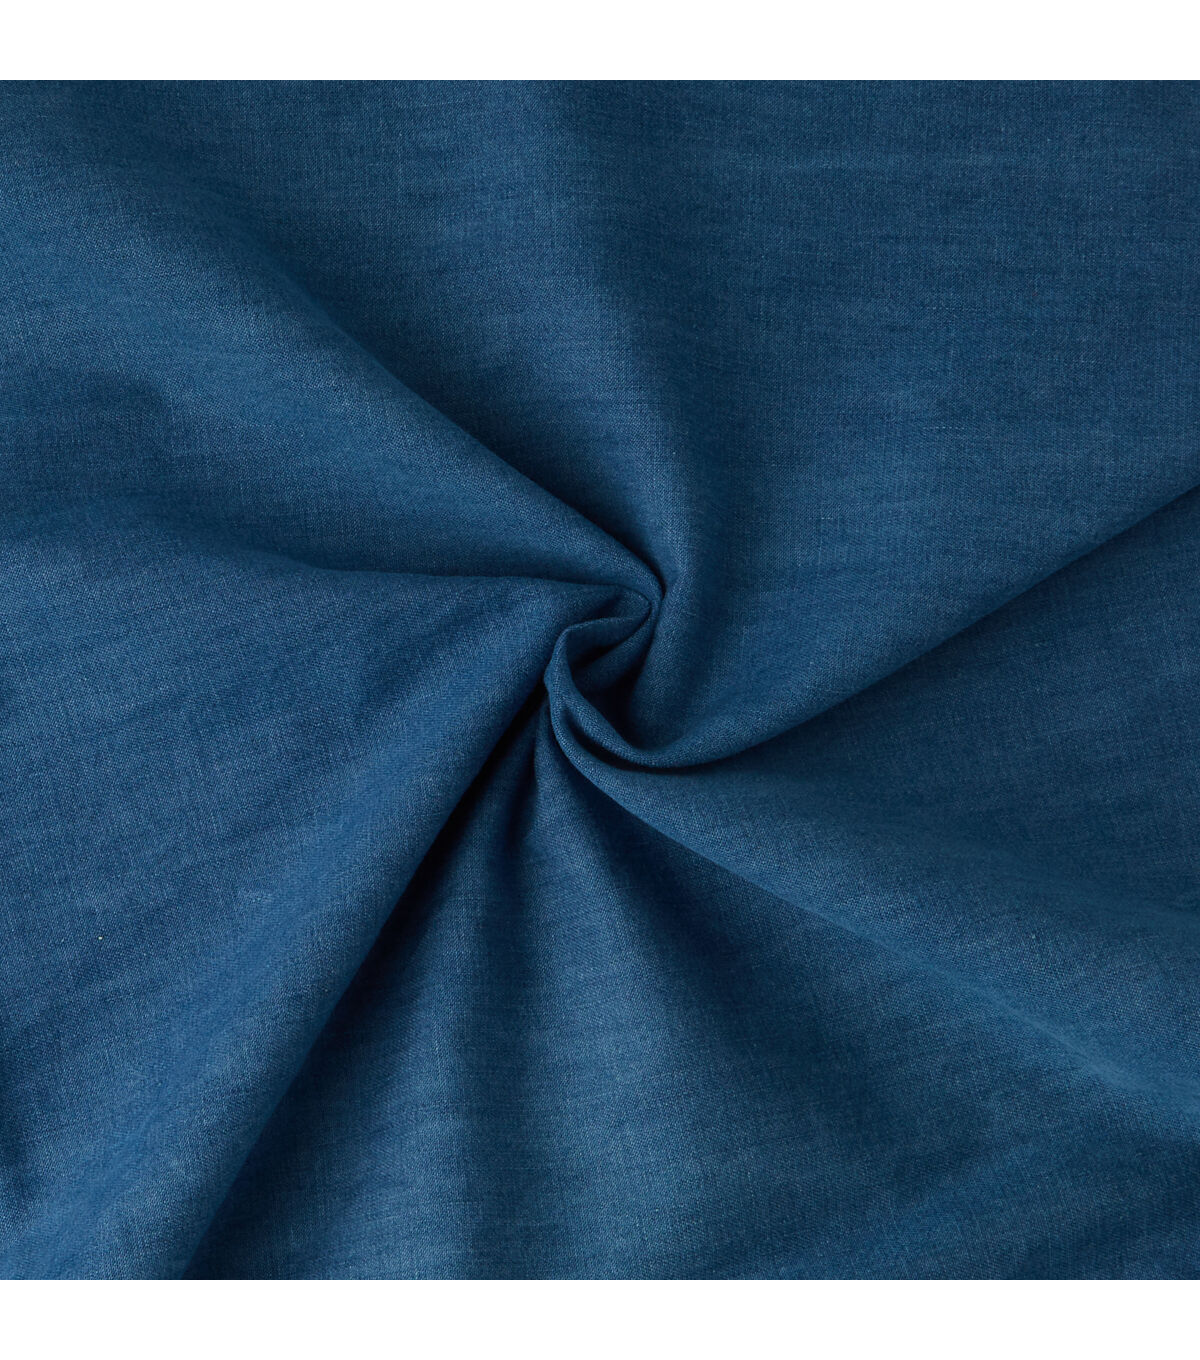 Polyester Plain Mesh Fabric at Rs 250/kilogram in New Delhi | ID:  13861640262